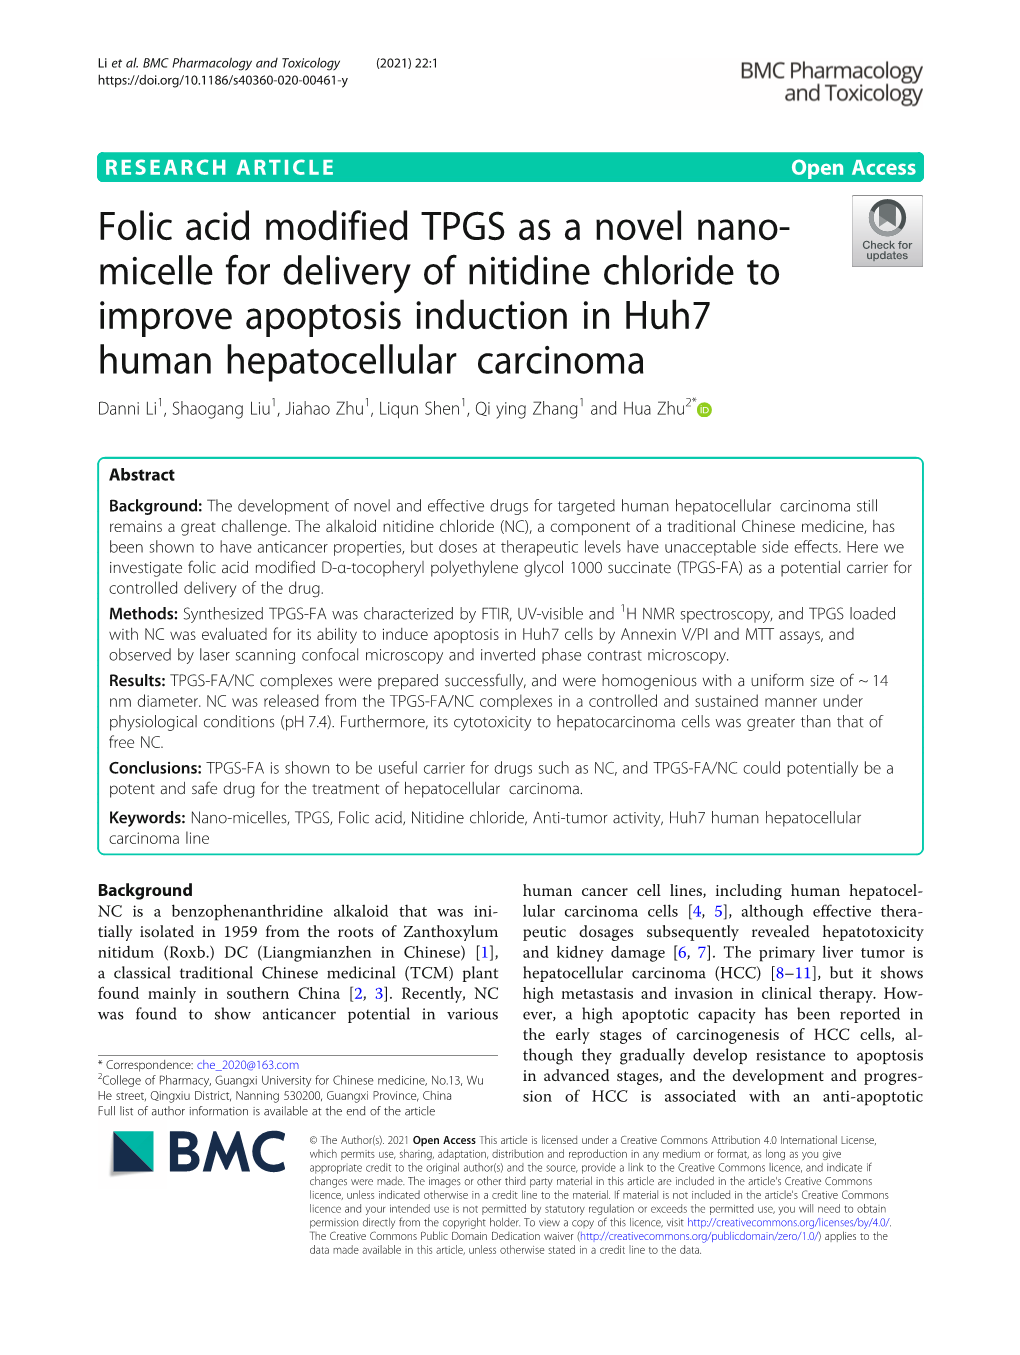 Folic Acid Modified TPGS As a Novel Nano-Micelle for Delivery of Nitidine